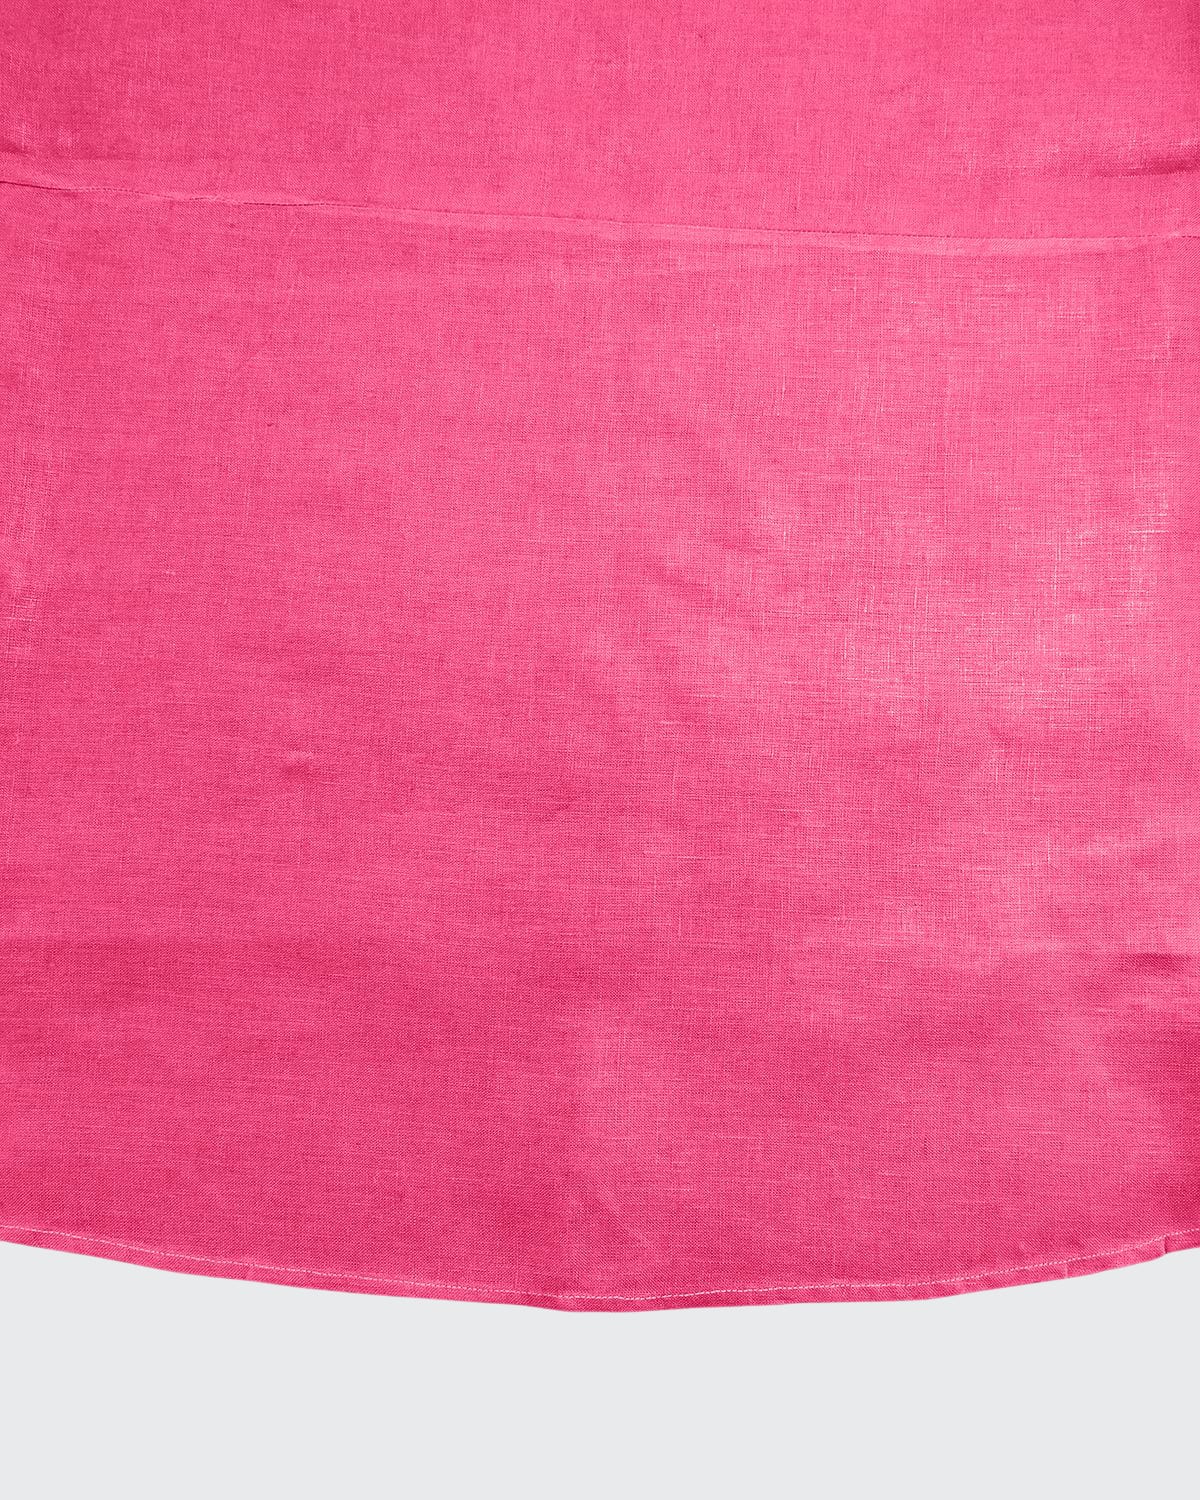 Sferra Hemstitch Round Tablecloth, 90"dia. In Pink